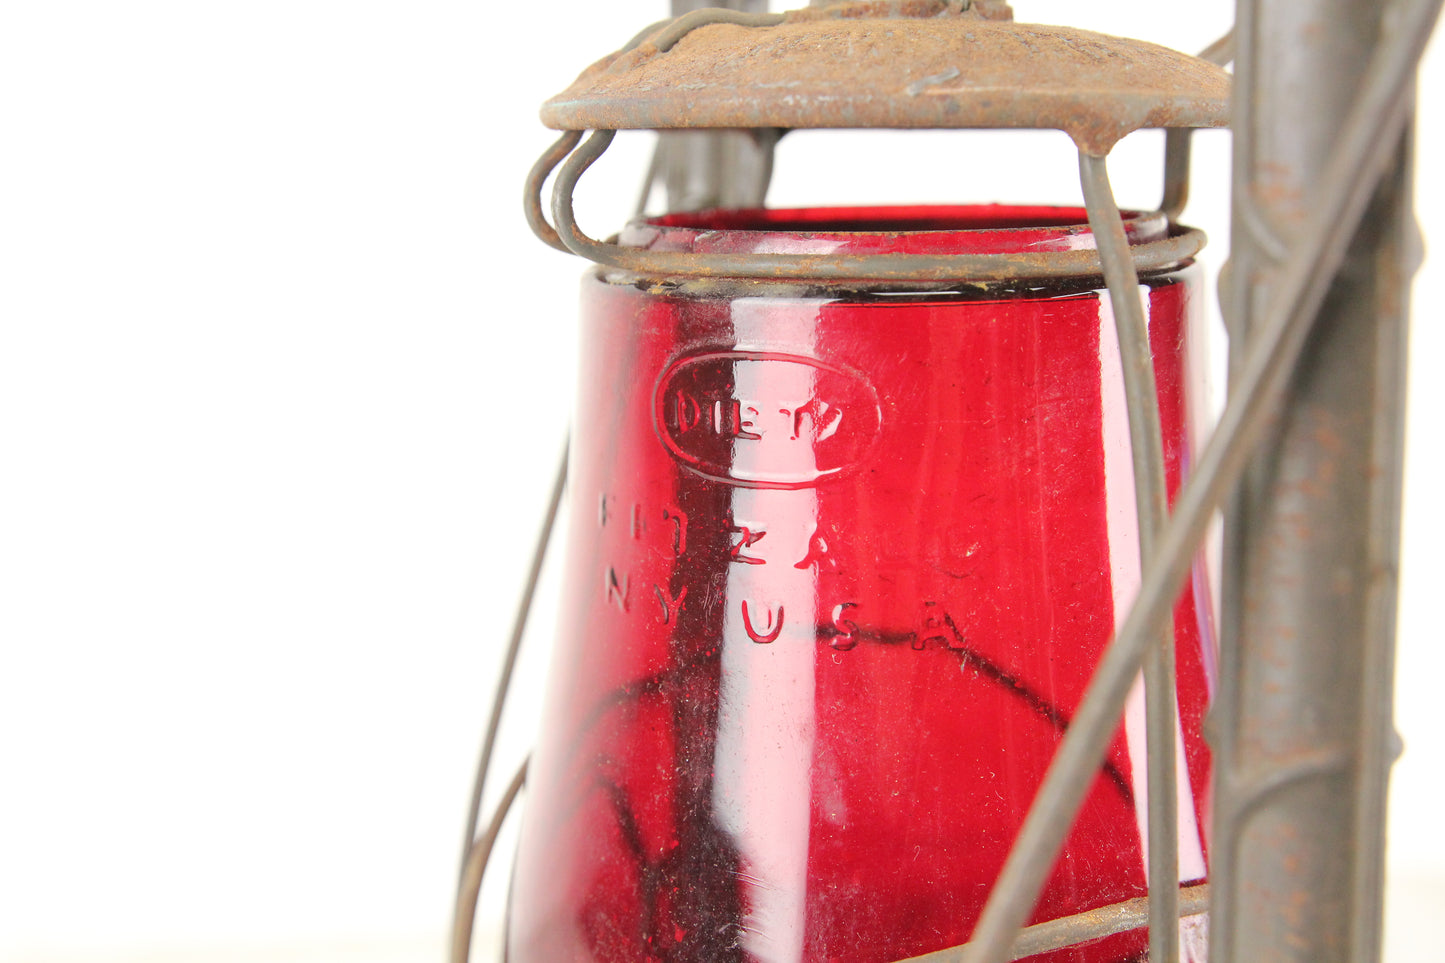 Dietz Monarch Red Glass Globe Barn Kerosene Oil Lamp Lantern, New York, USA